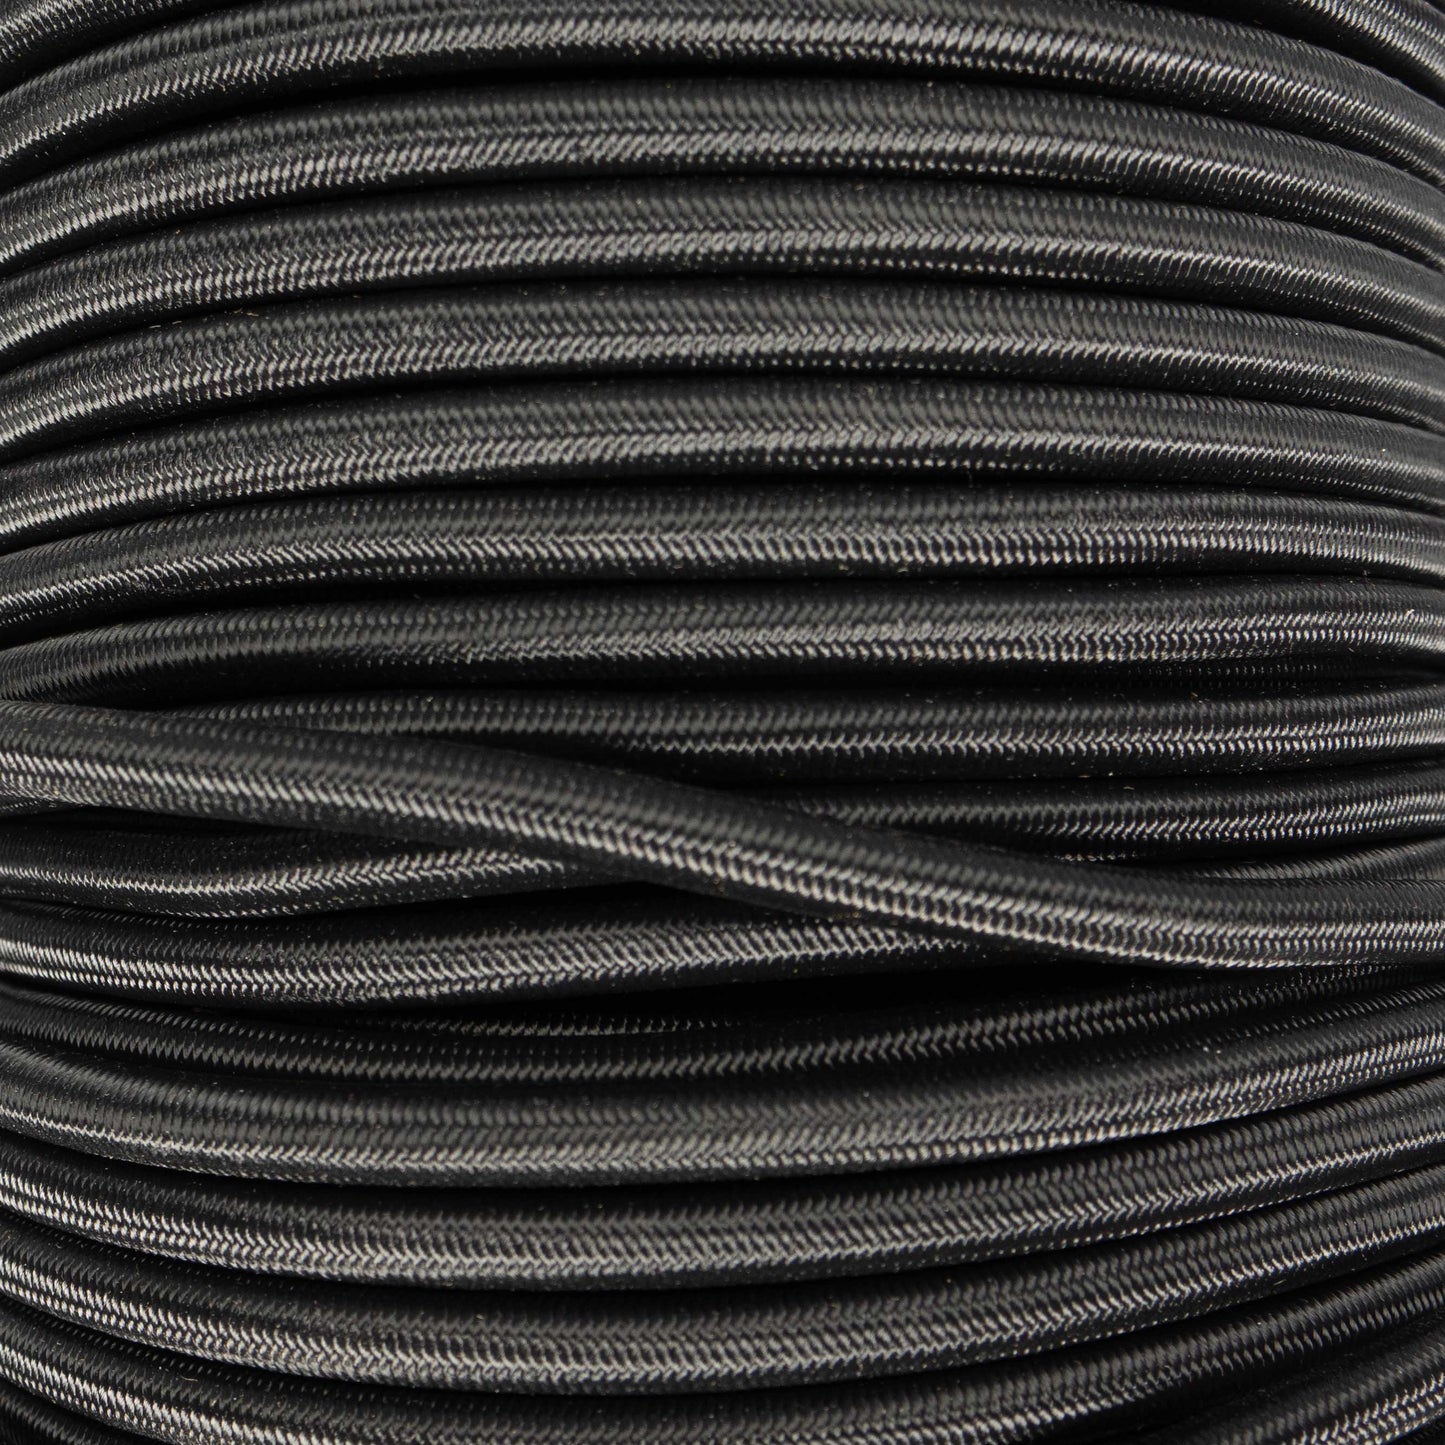 38 foot foot9mm Black Polyester Shock Cord Spool (300 foot) image 1 of 8 image 2 of 8 image 3 of 8